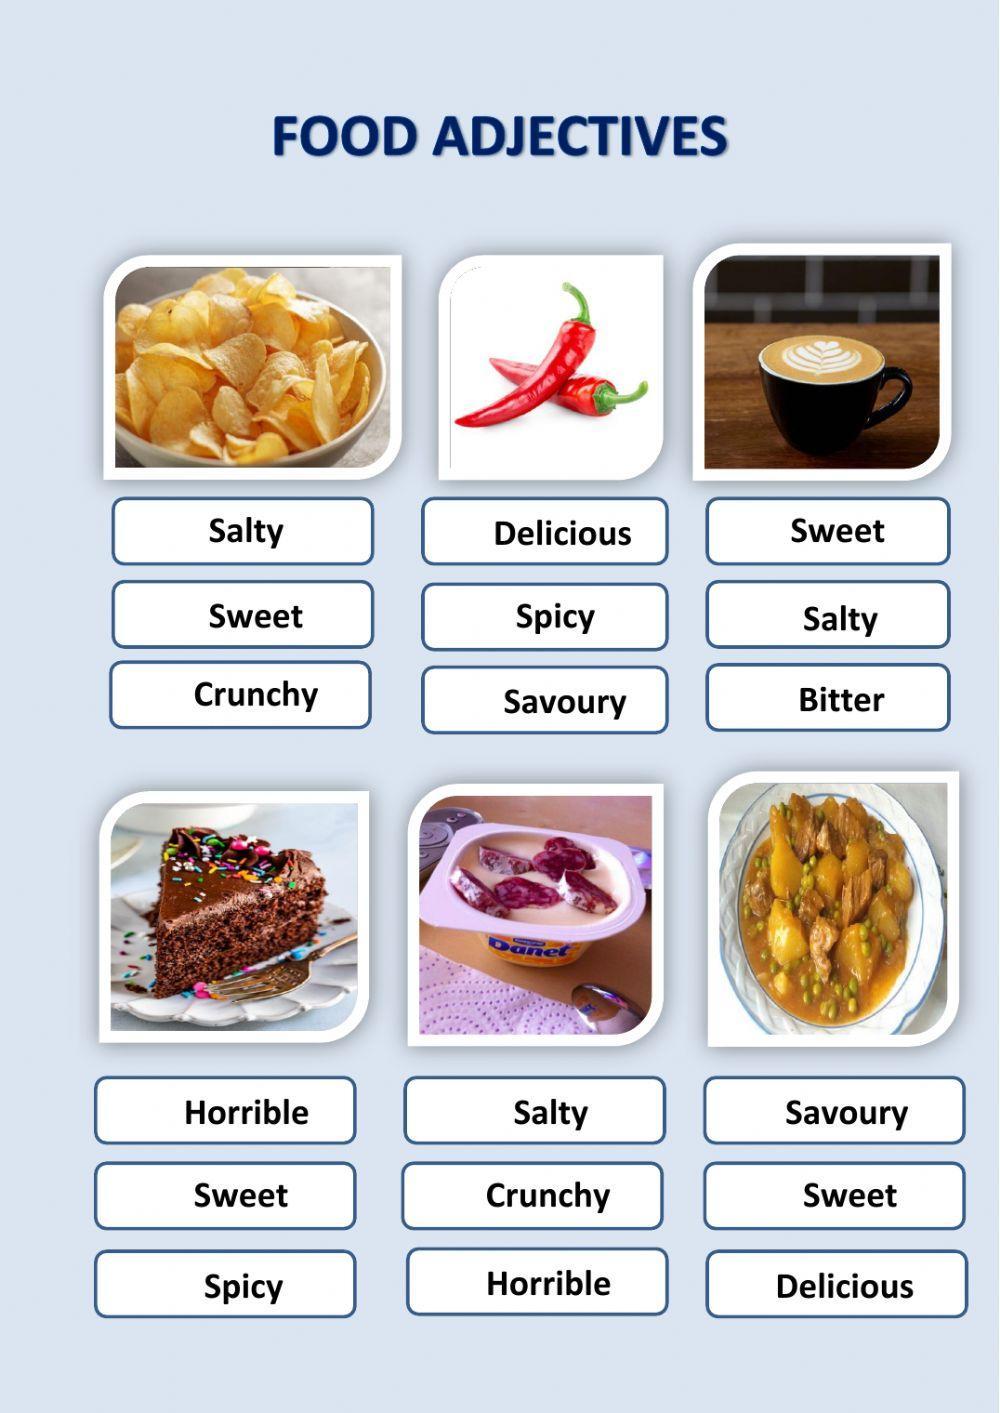 Food adjectives